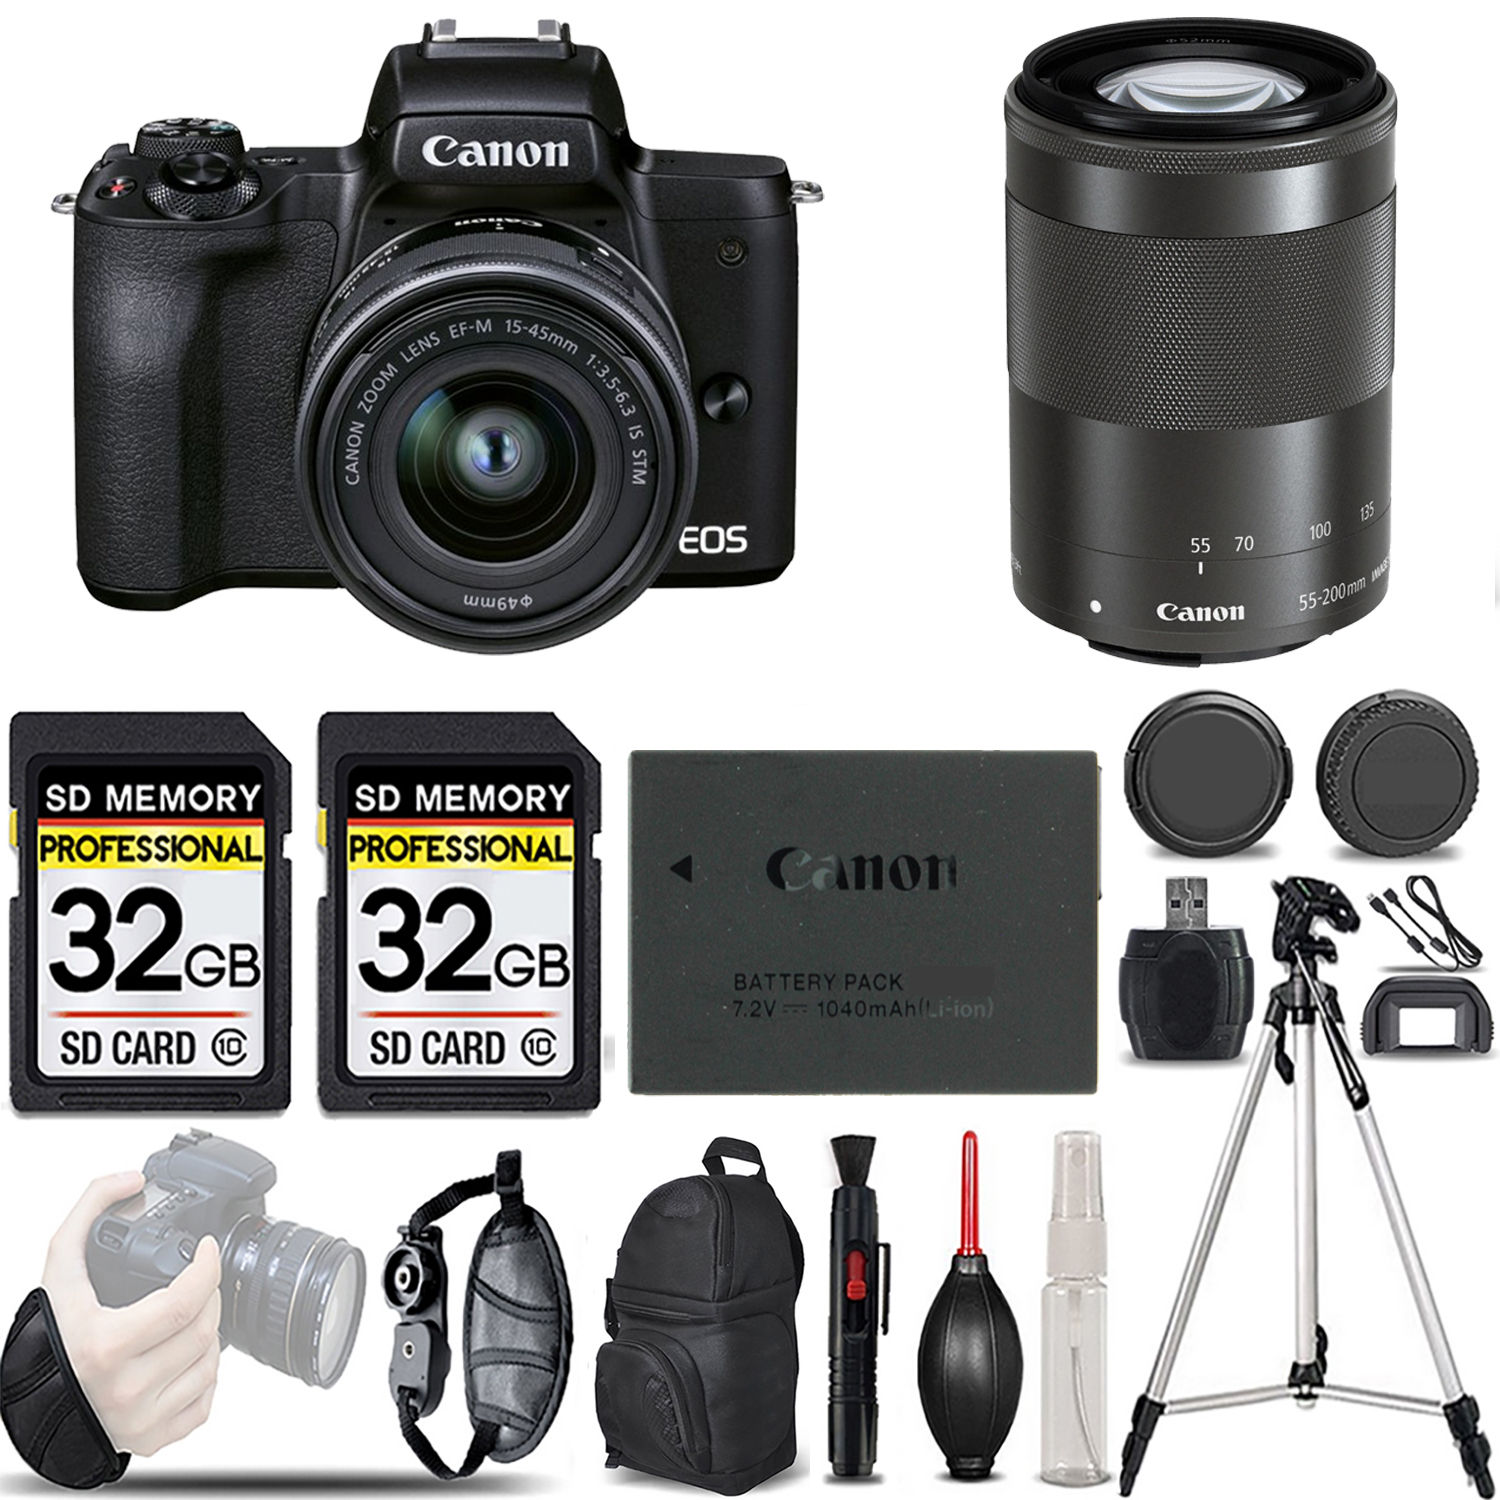 M50 II + 15-45mm Lens (Black) + 55-200mm IS Lens (Black) - LOADED KIT *FREE SHIPPING*